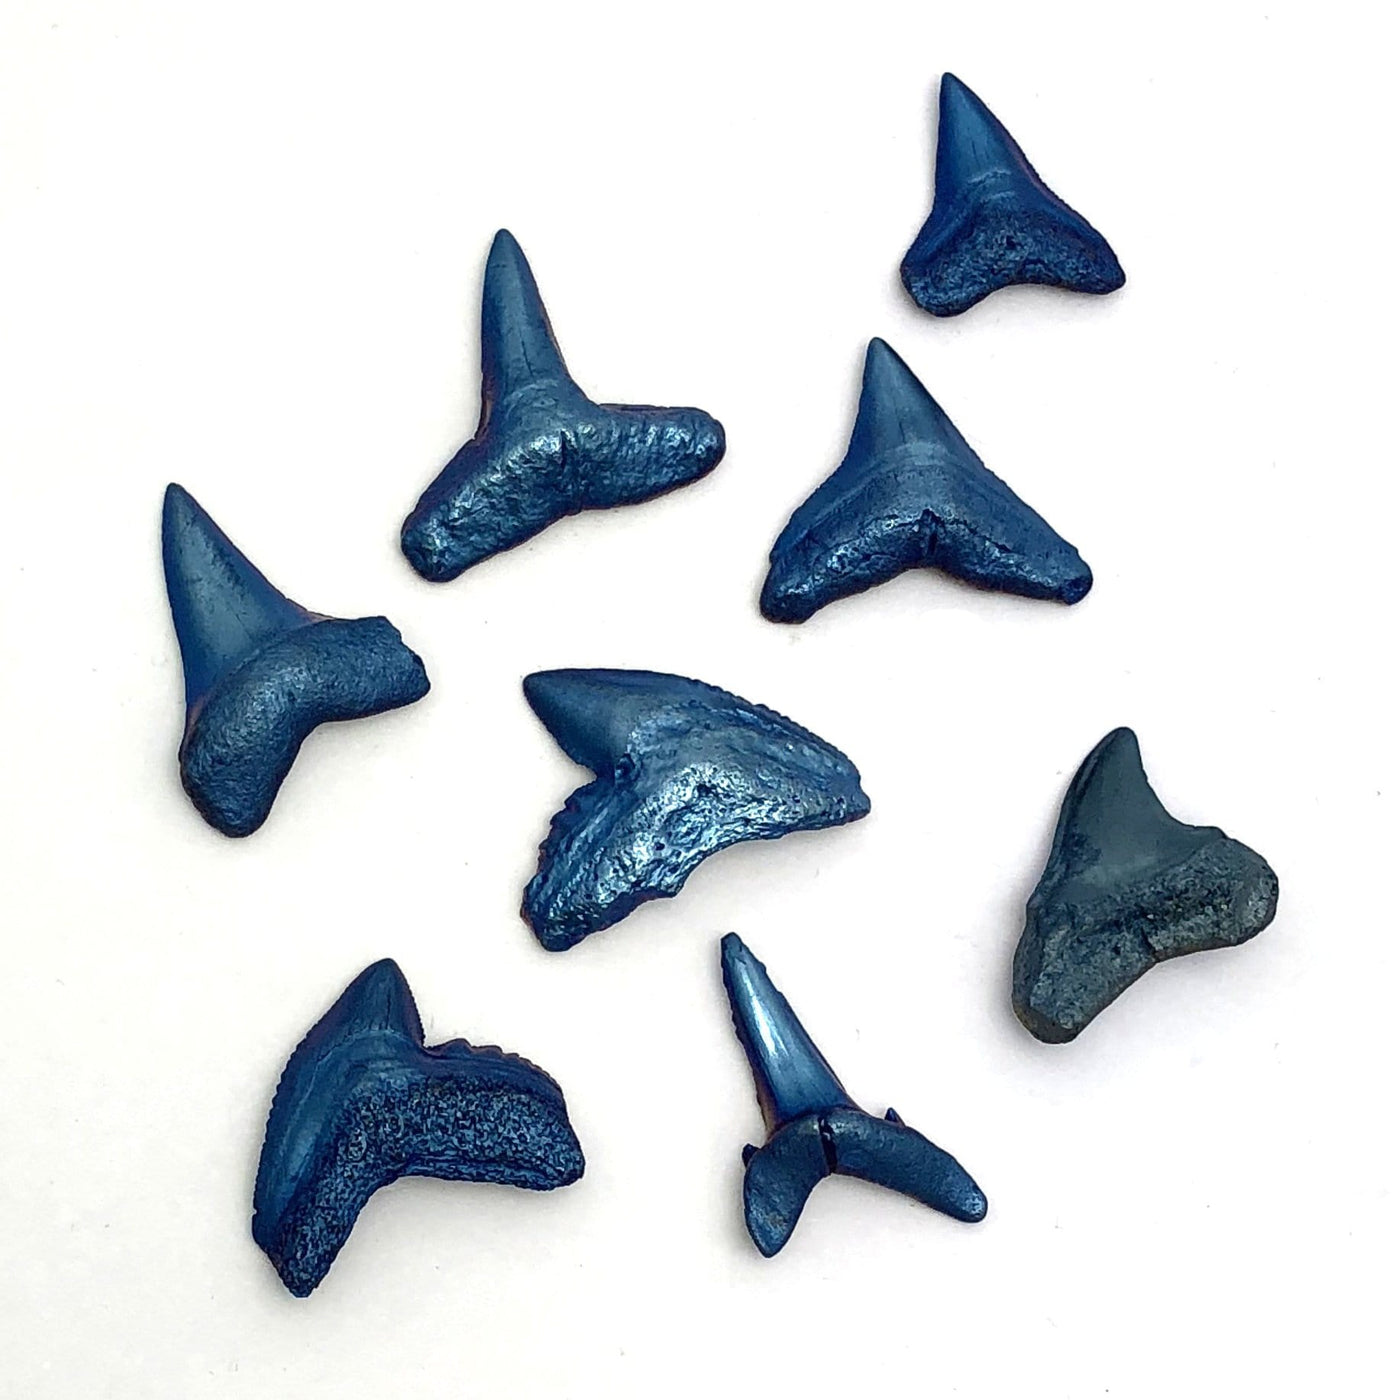 8 titanium shark teeth scattered on white background